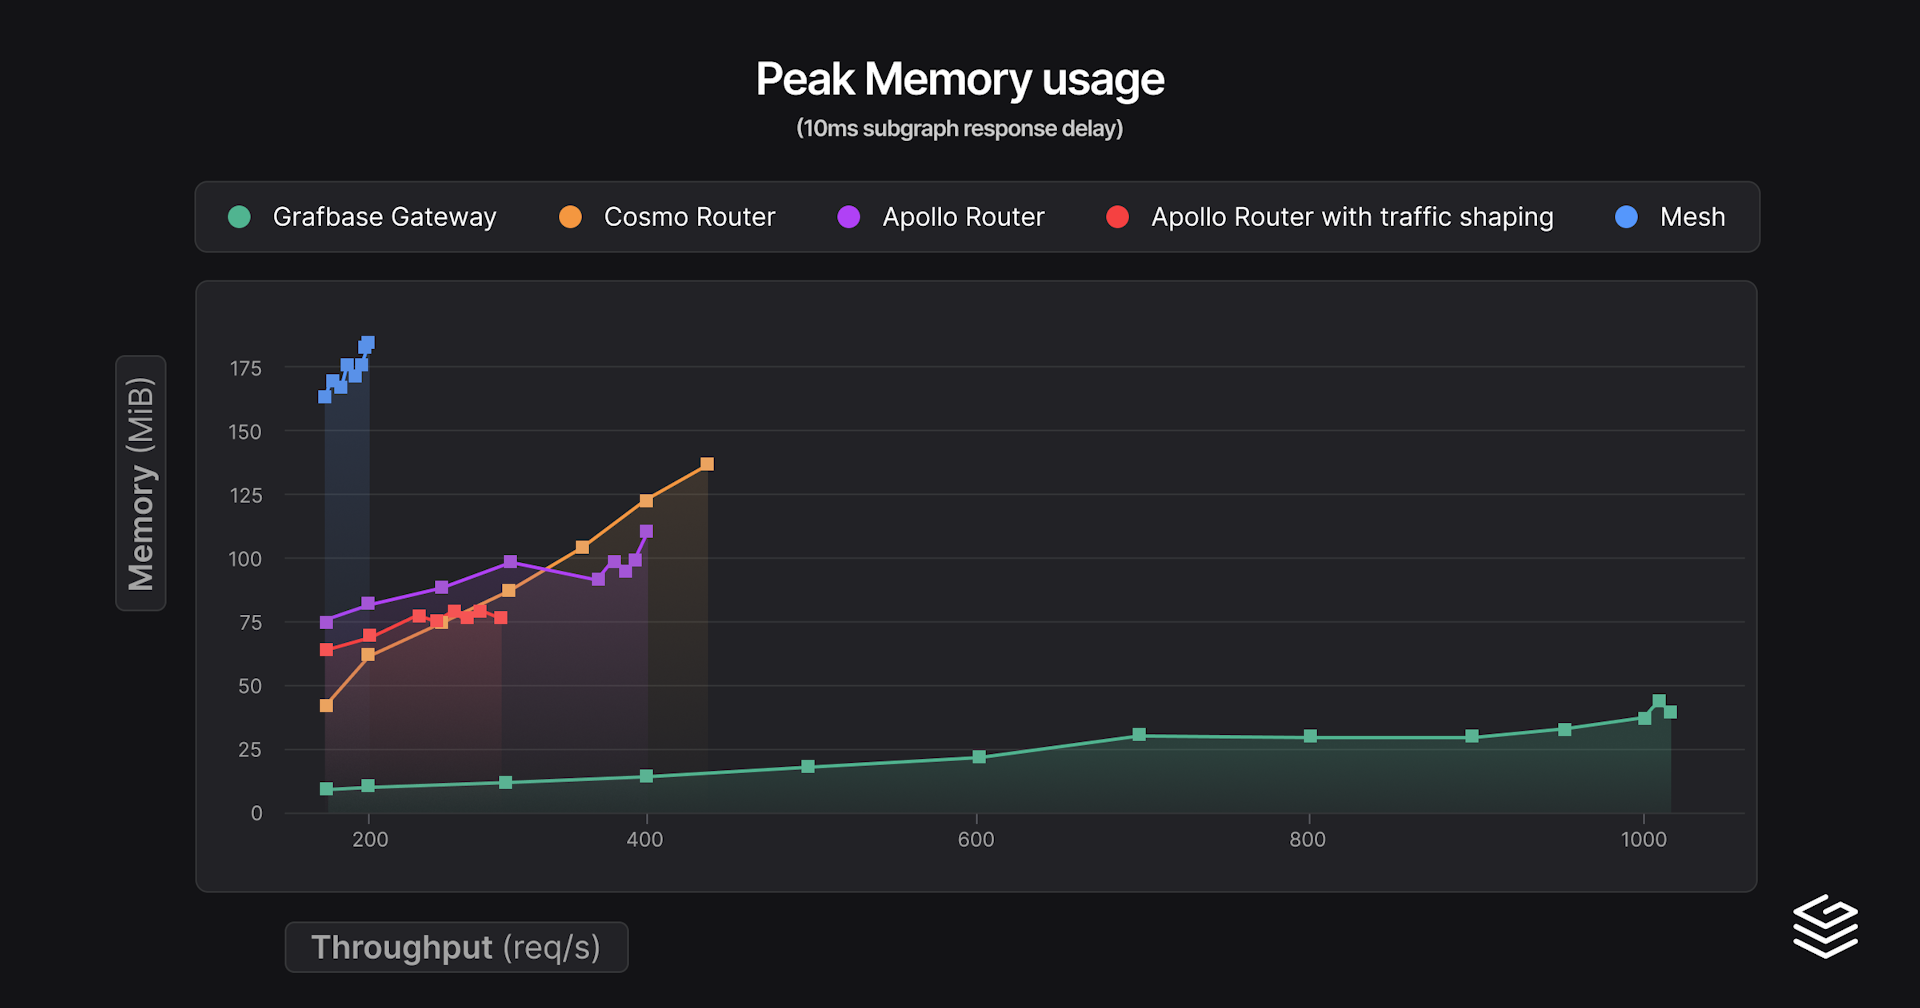 Peak memory usage